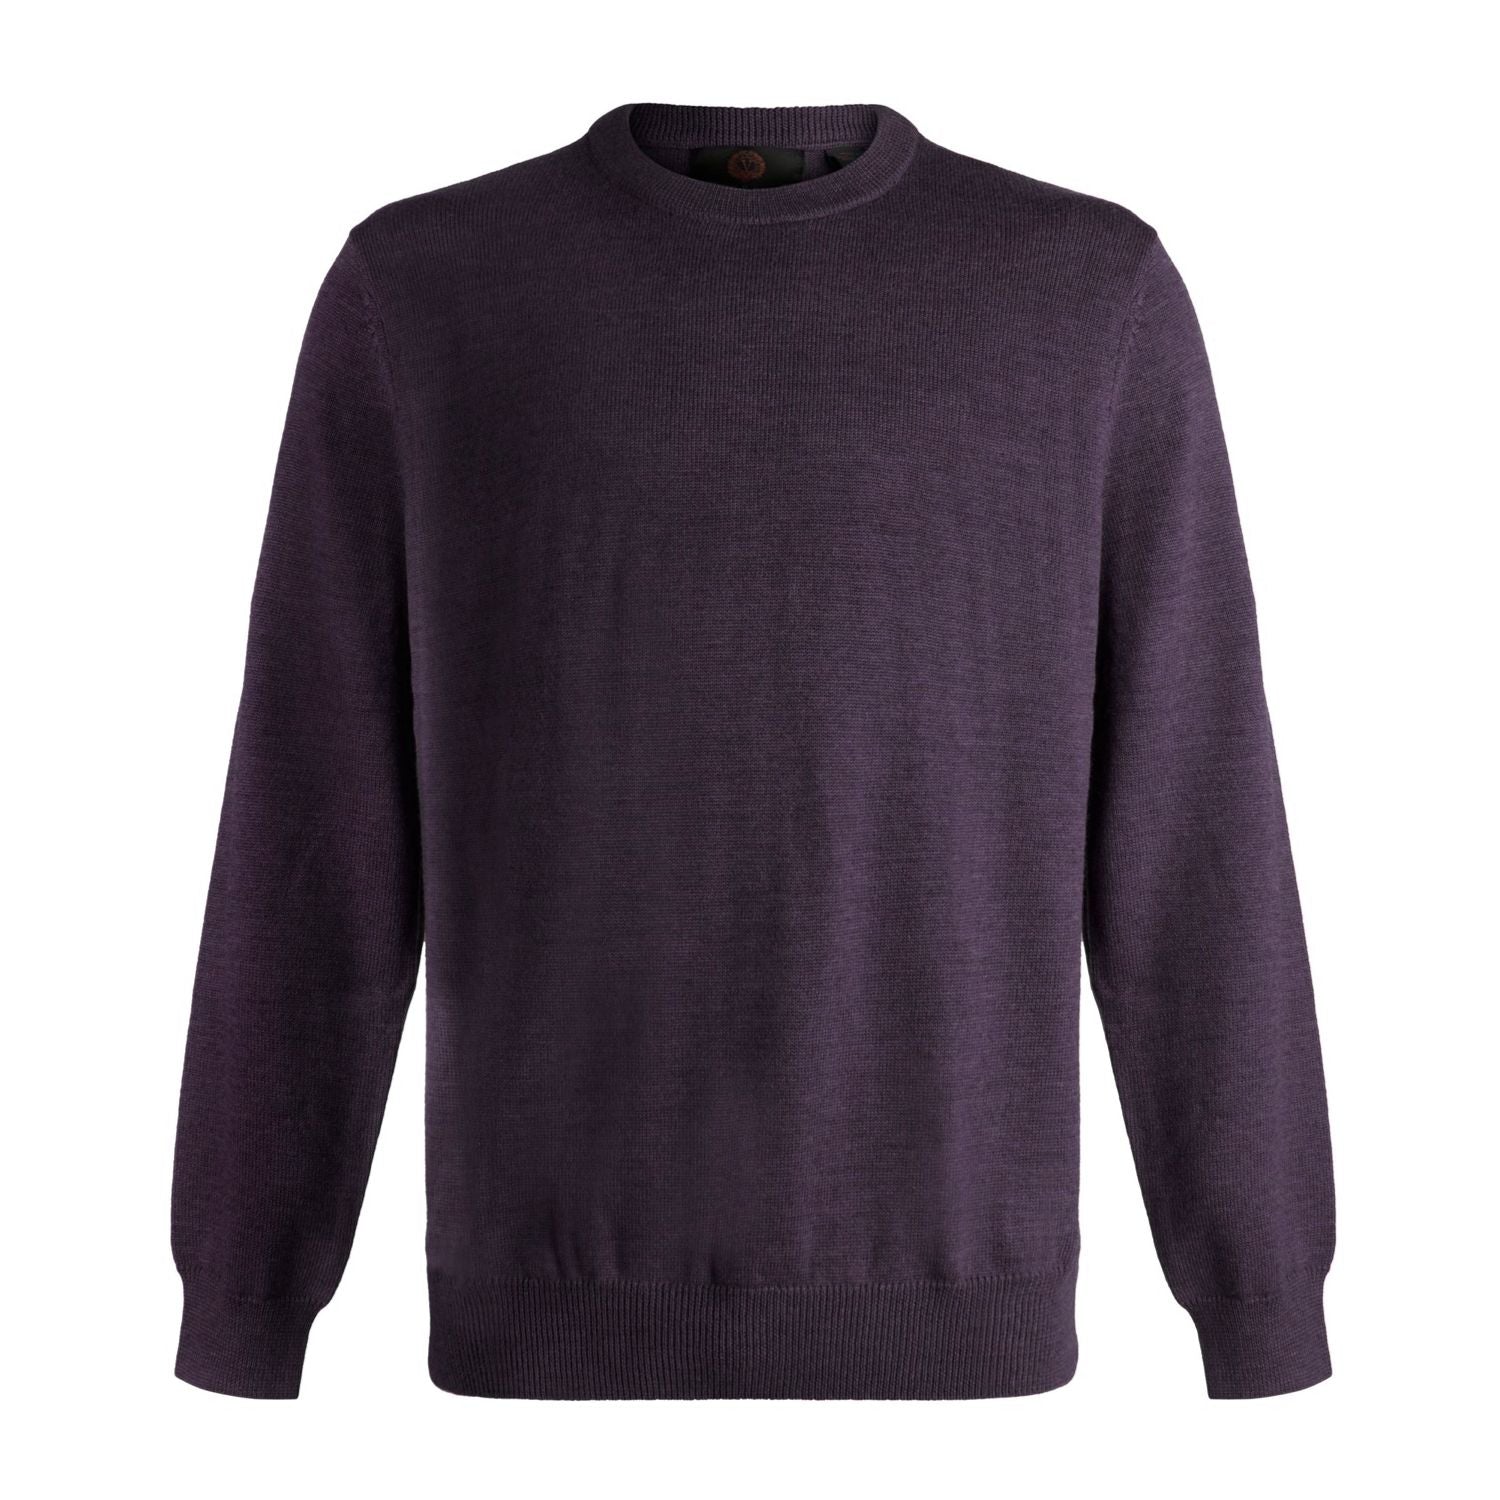 Extra Fine 'Zegna Baruffa' Merino Wool Crew Neck Sweater in Mulberry by Viyella